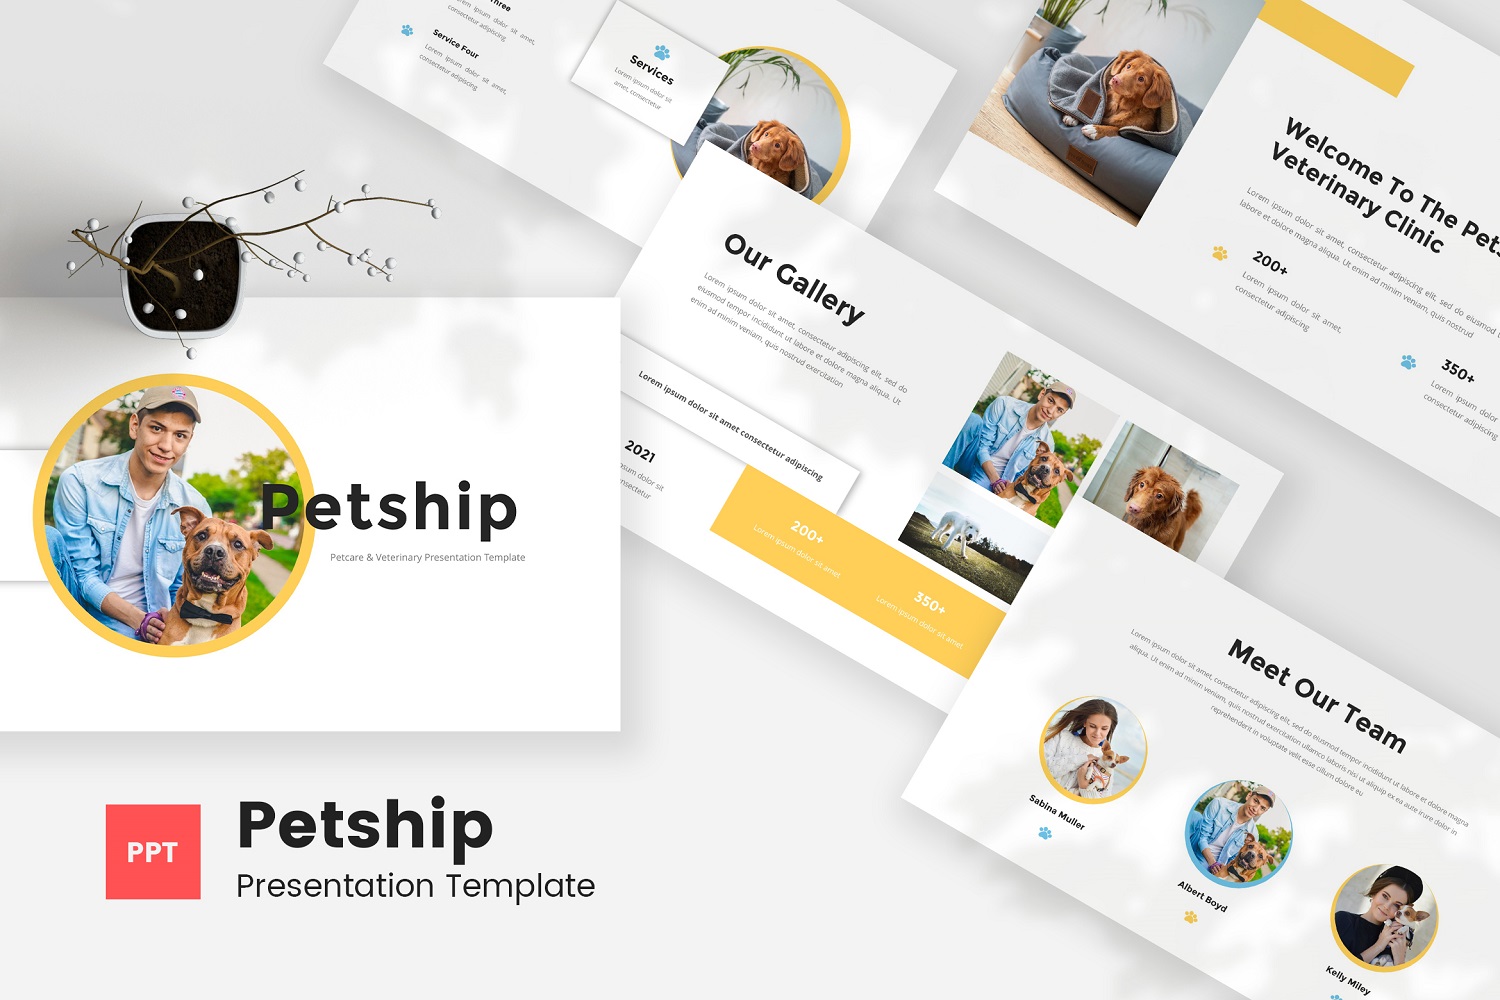 Petship - Pet Care & Veterinary Powerpoint Template